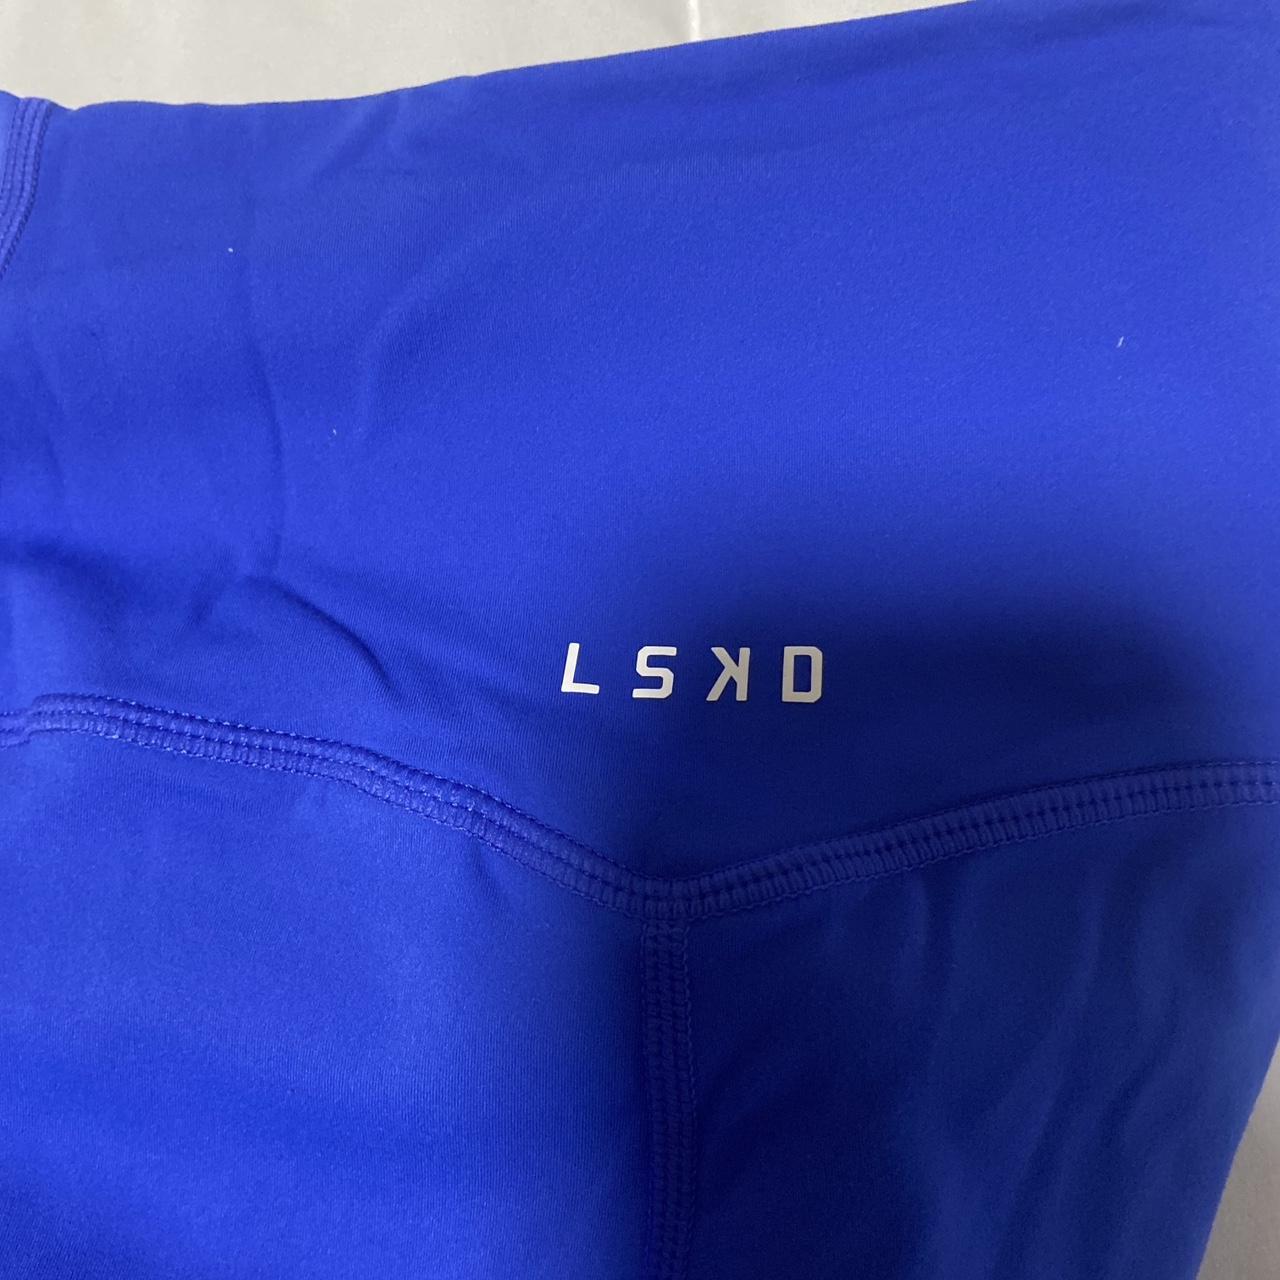 LSKD - LSKD Full Length Tight on Designer Wardrobe